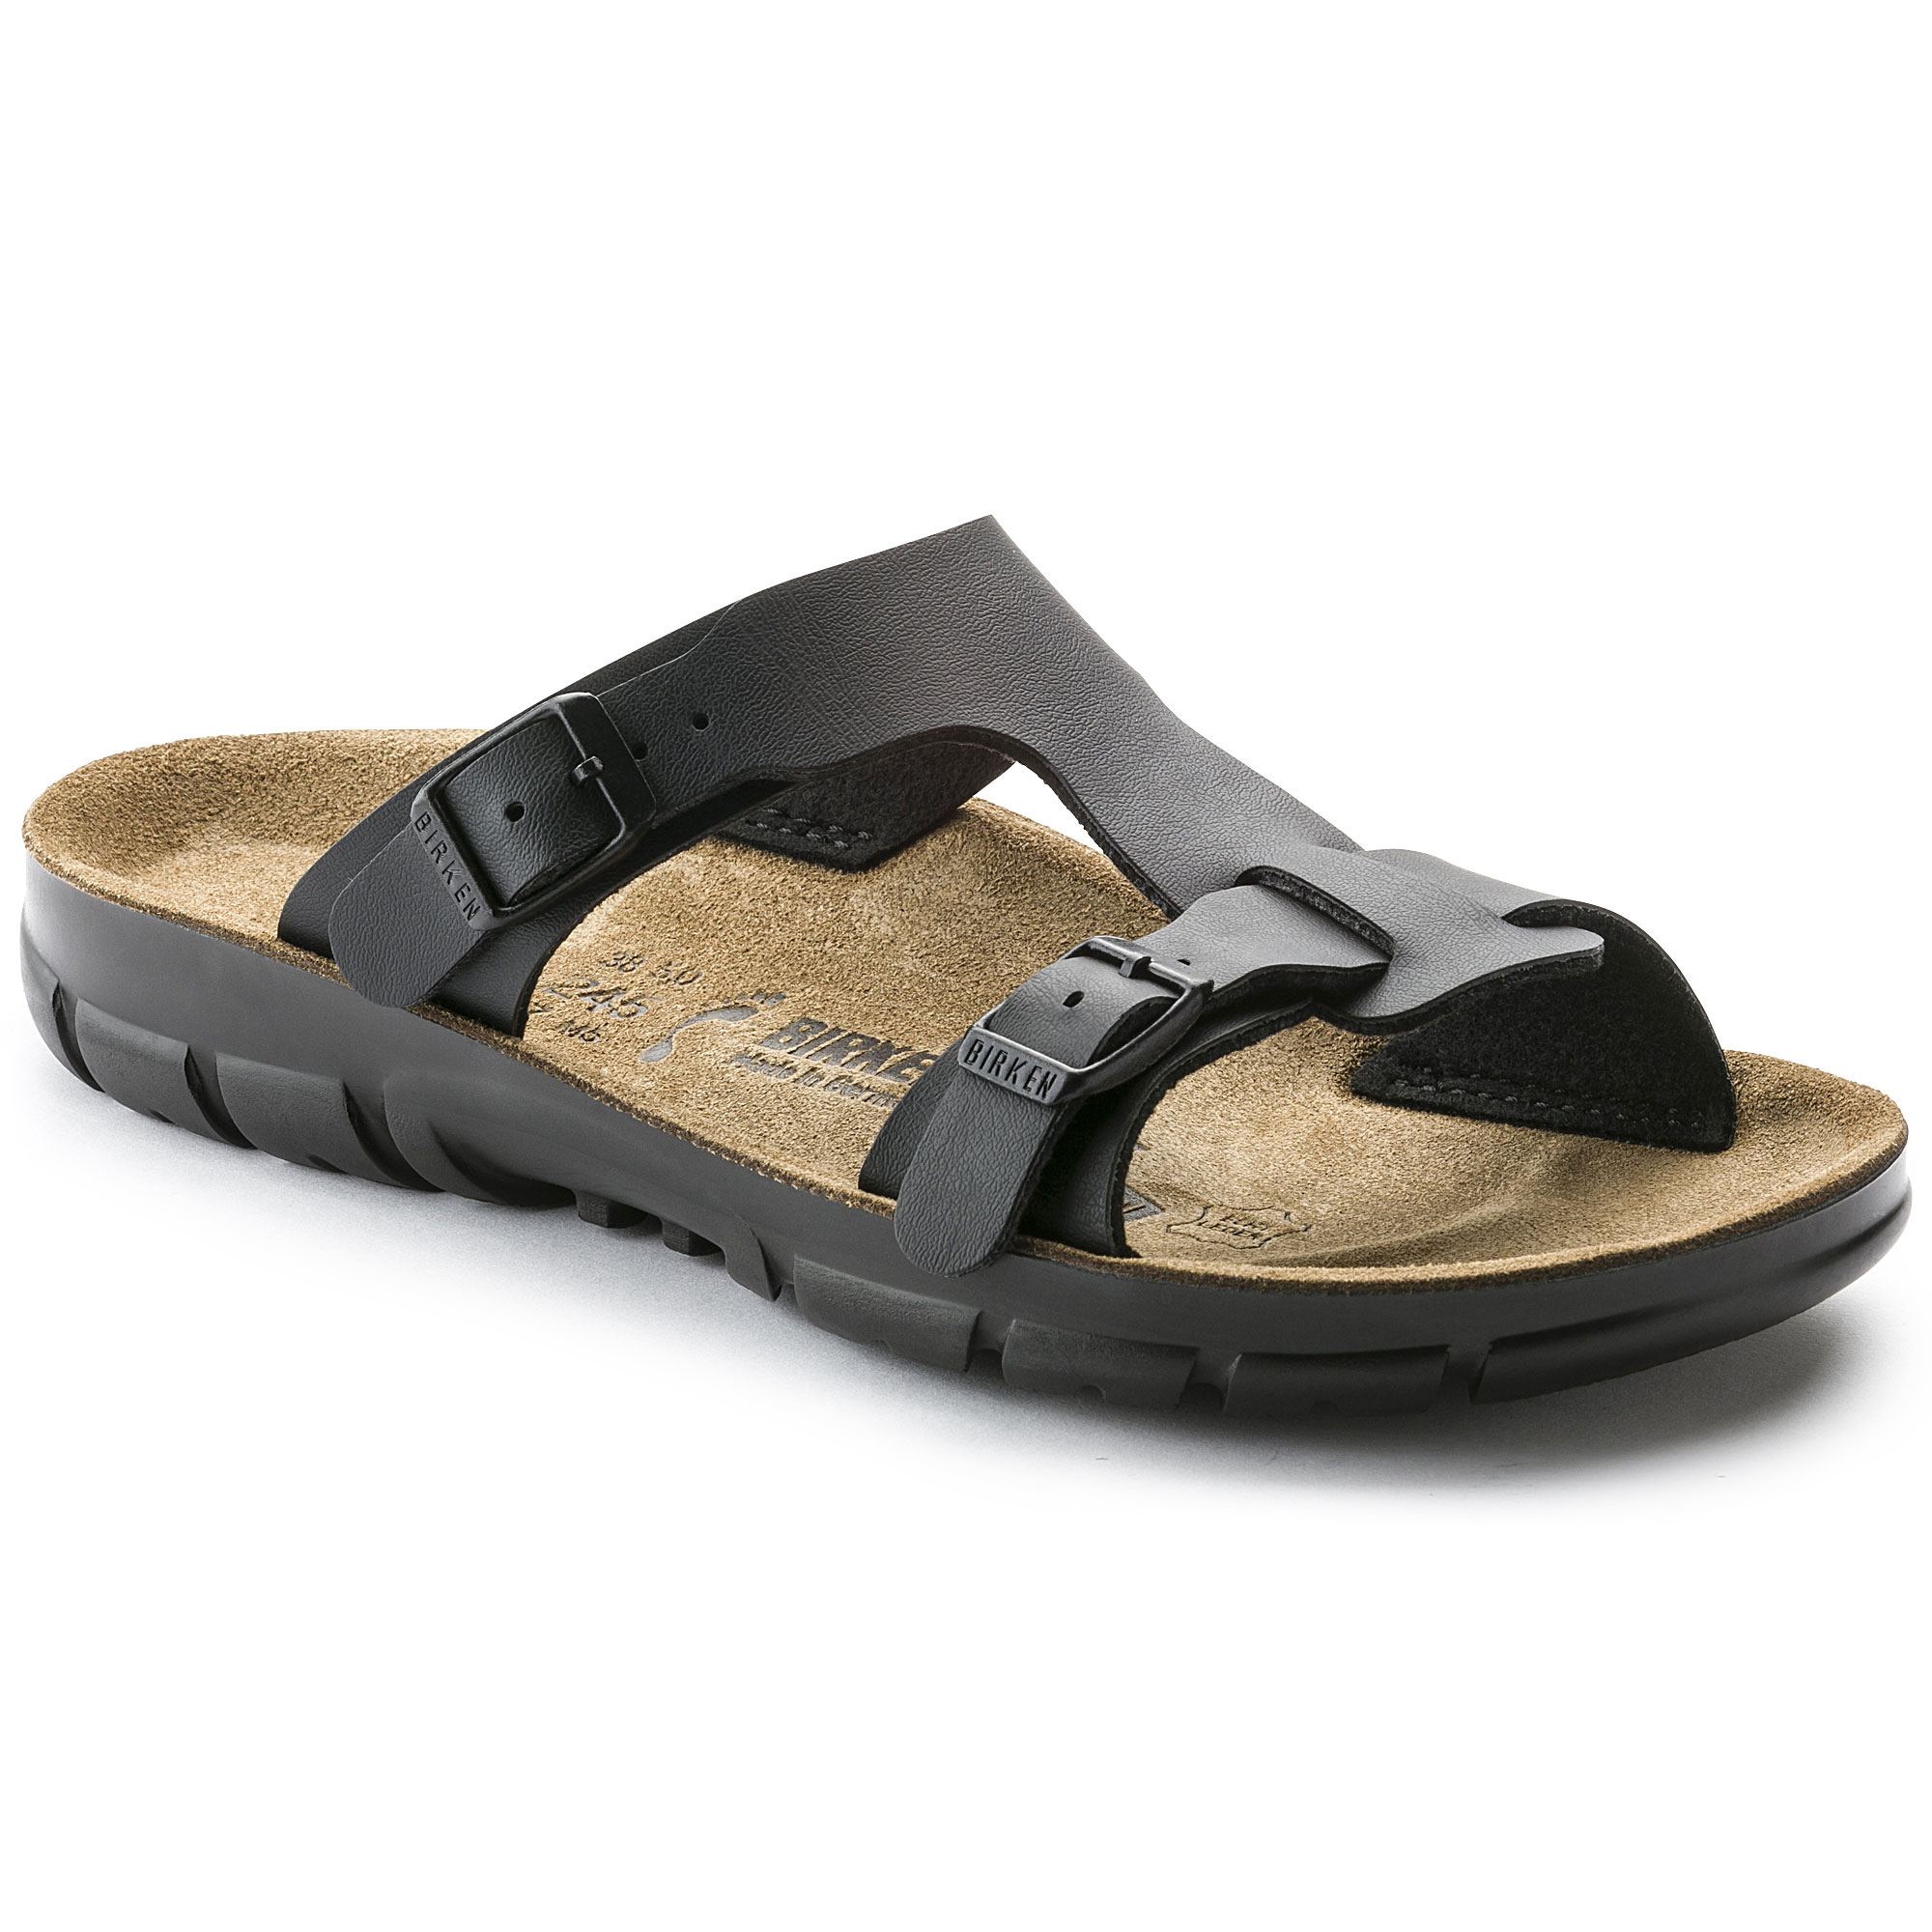 birkenstock sofia womens sandals